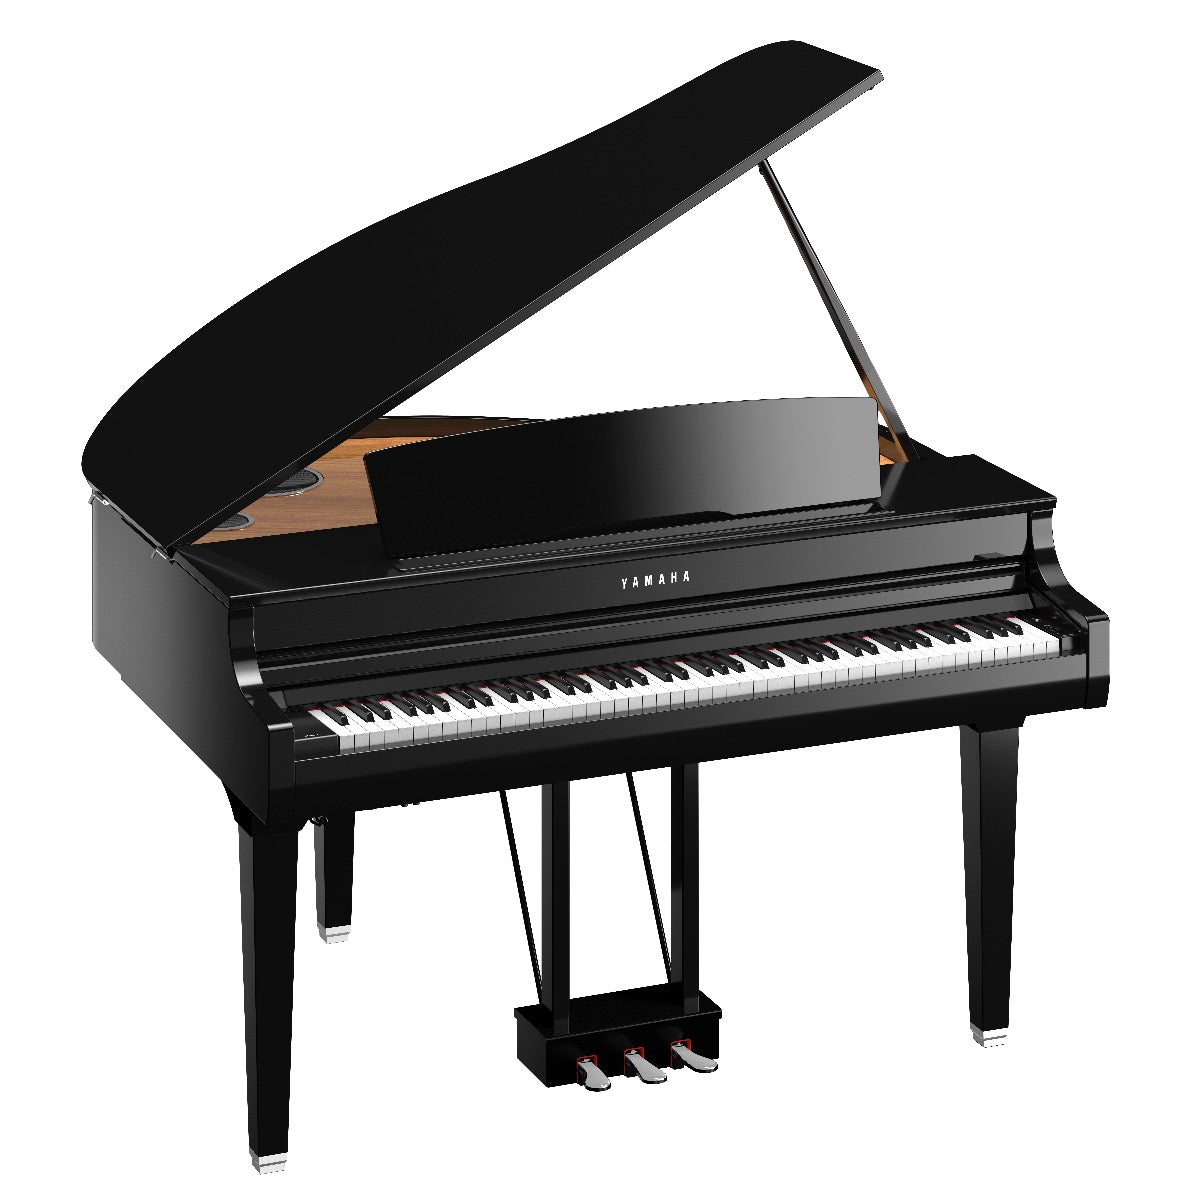 Yamaha Clavinova CSP295GP Digital Grand Piano with Bench - Polished Ebony, View 2